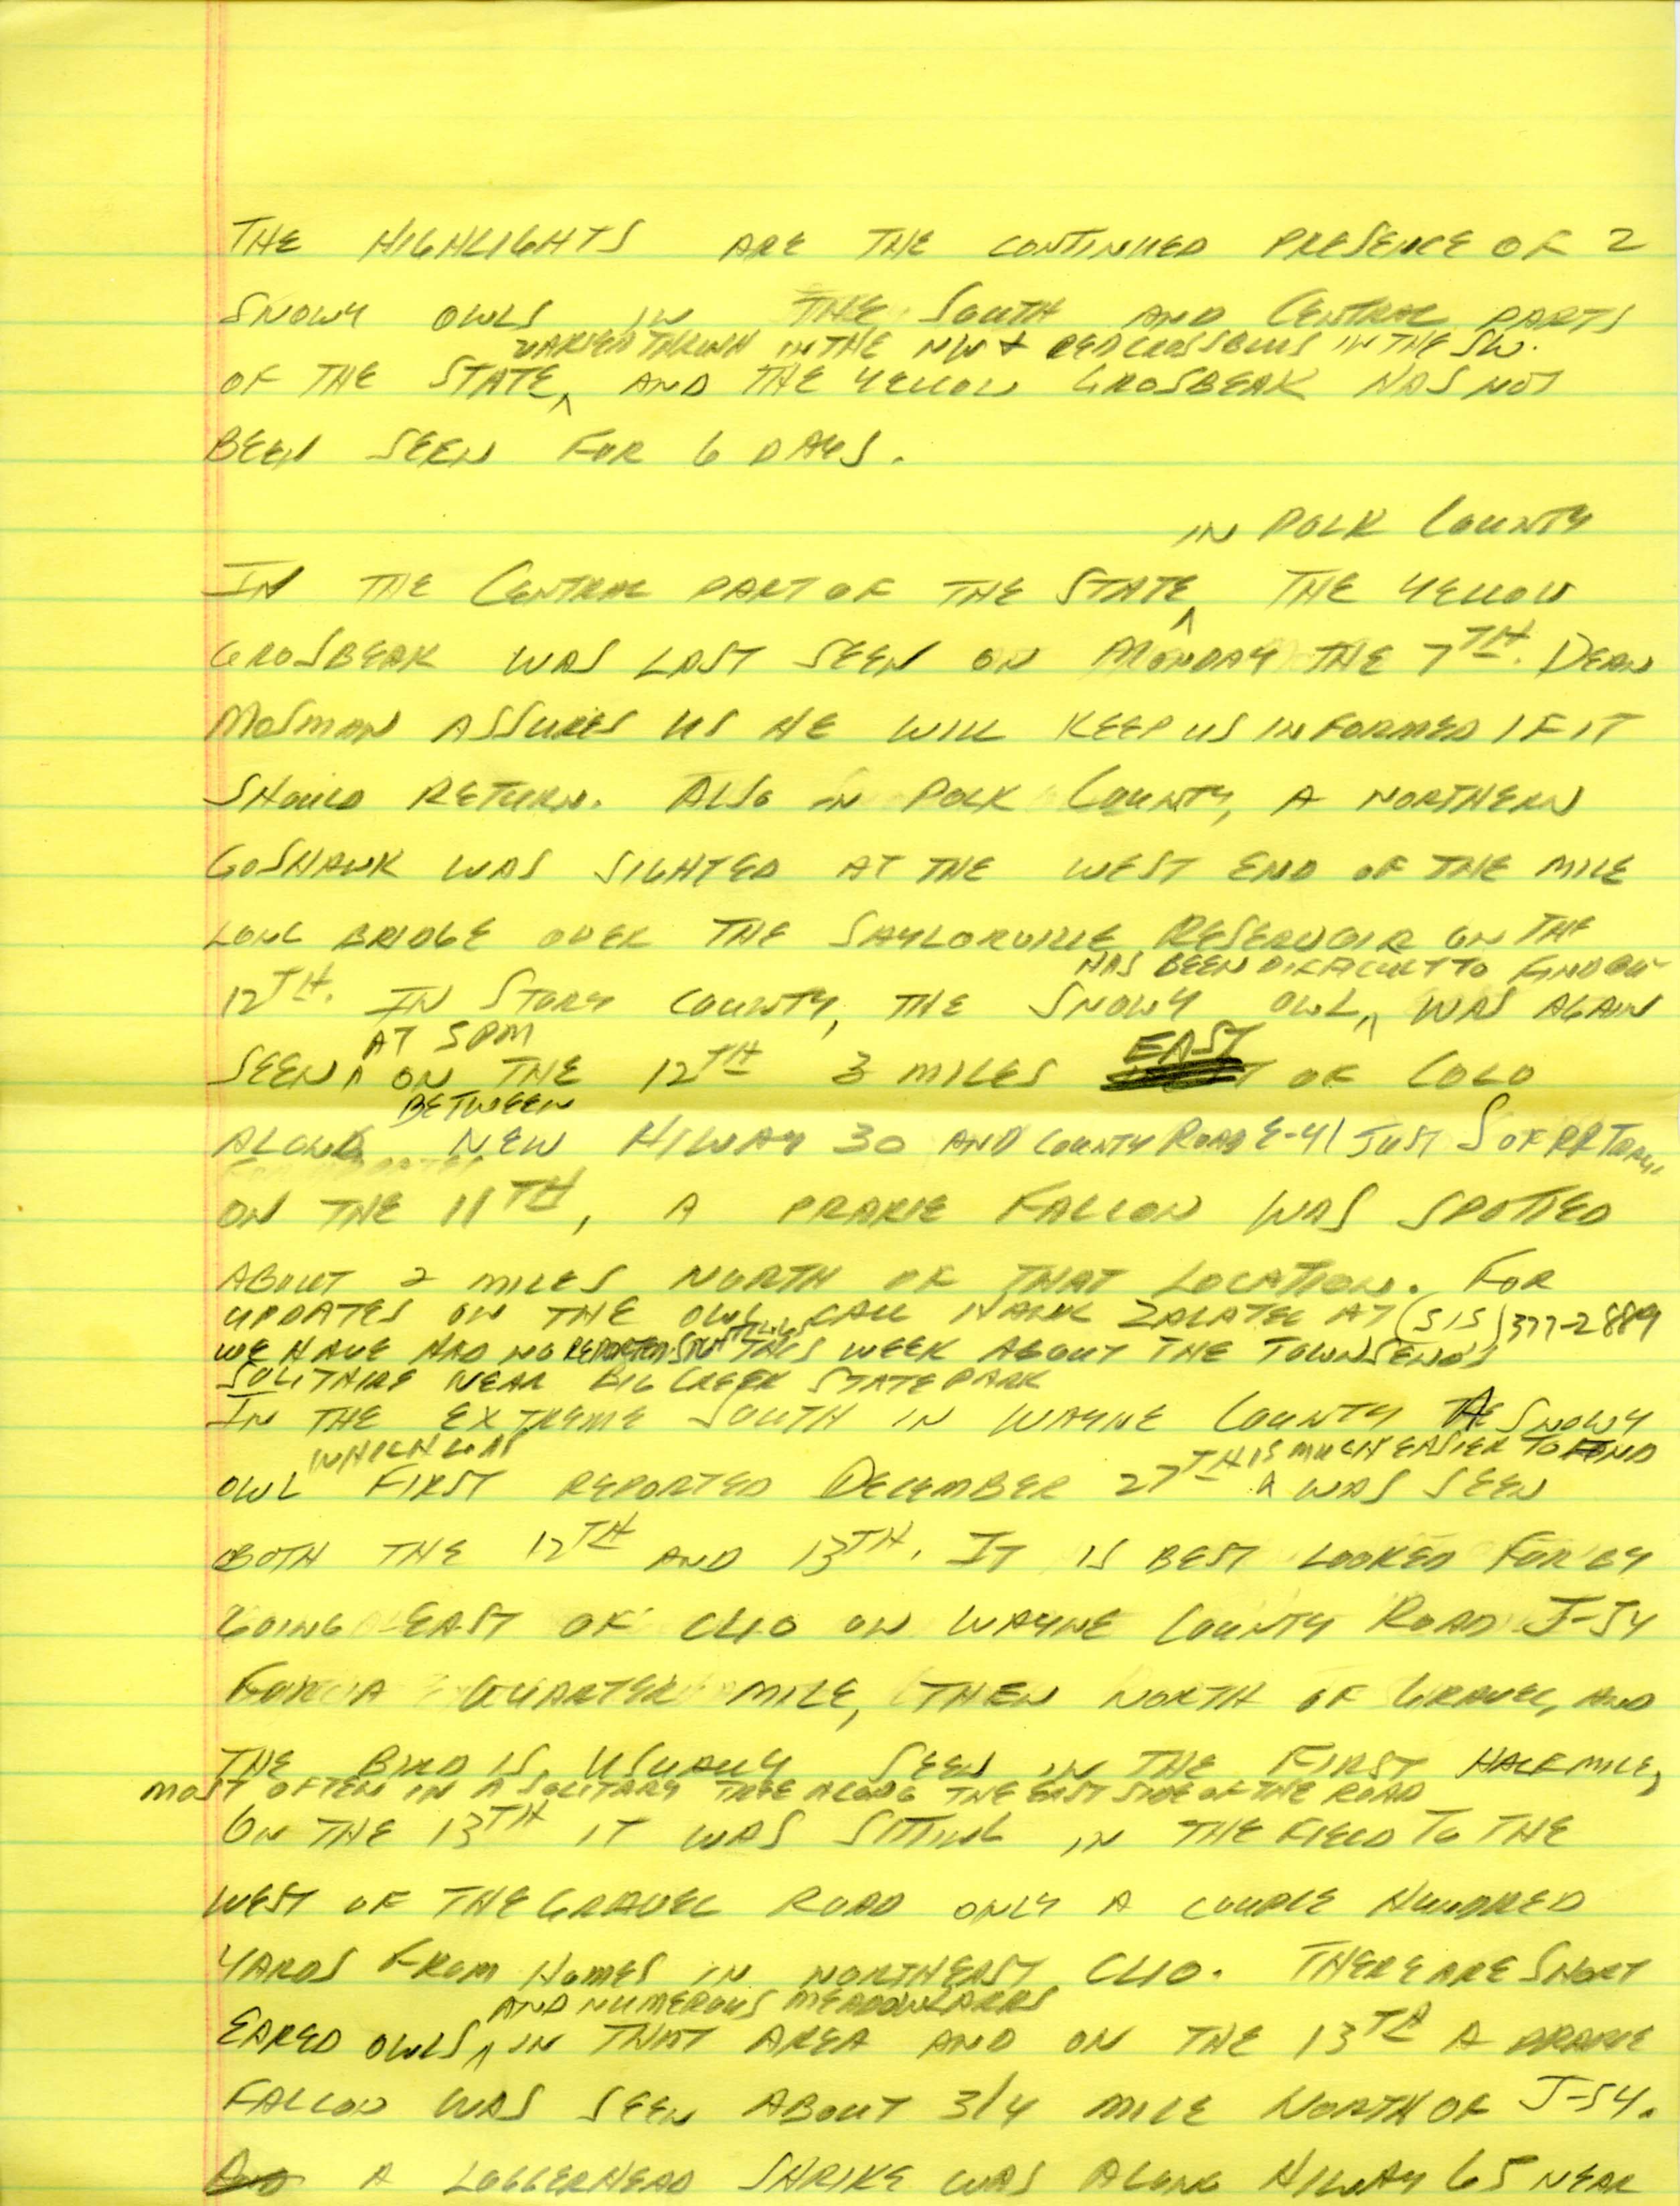 Iowa Birdline update, January 14, 1991 notes